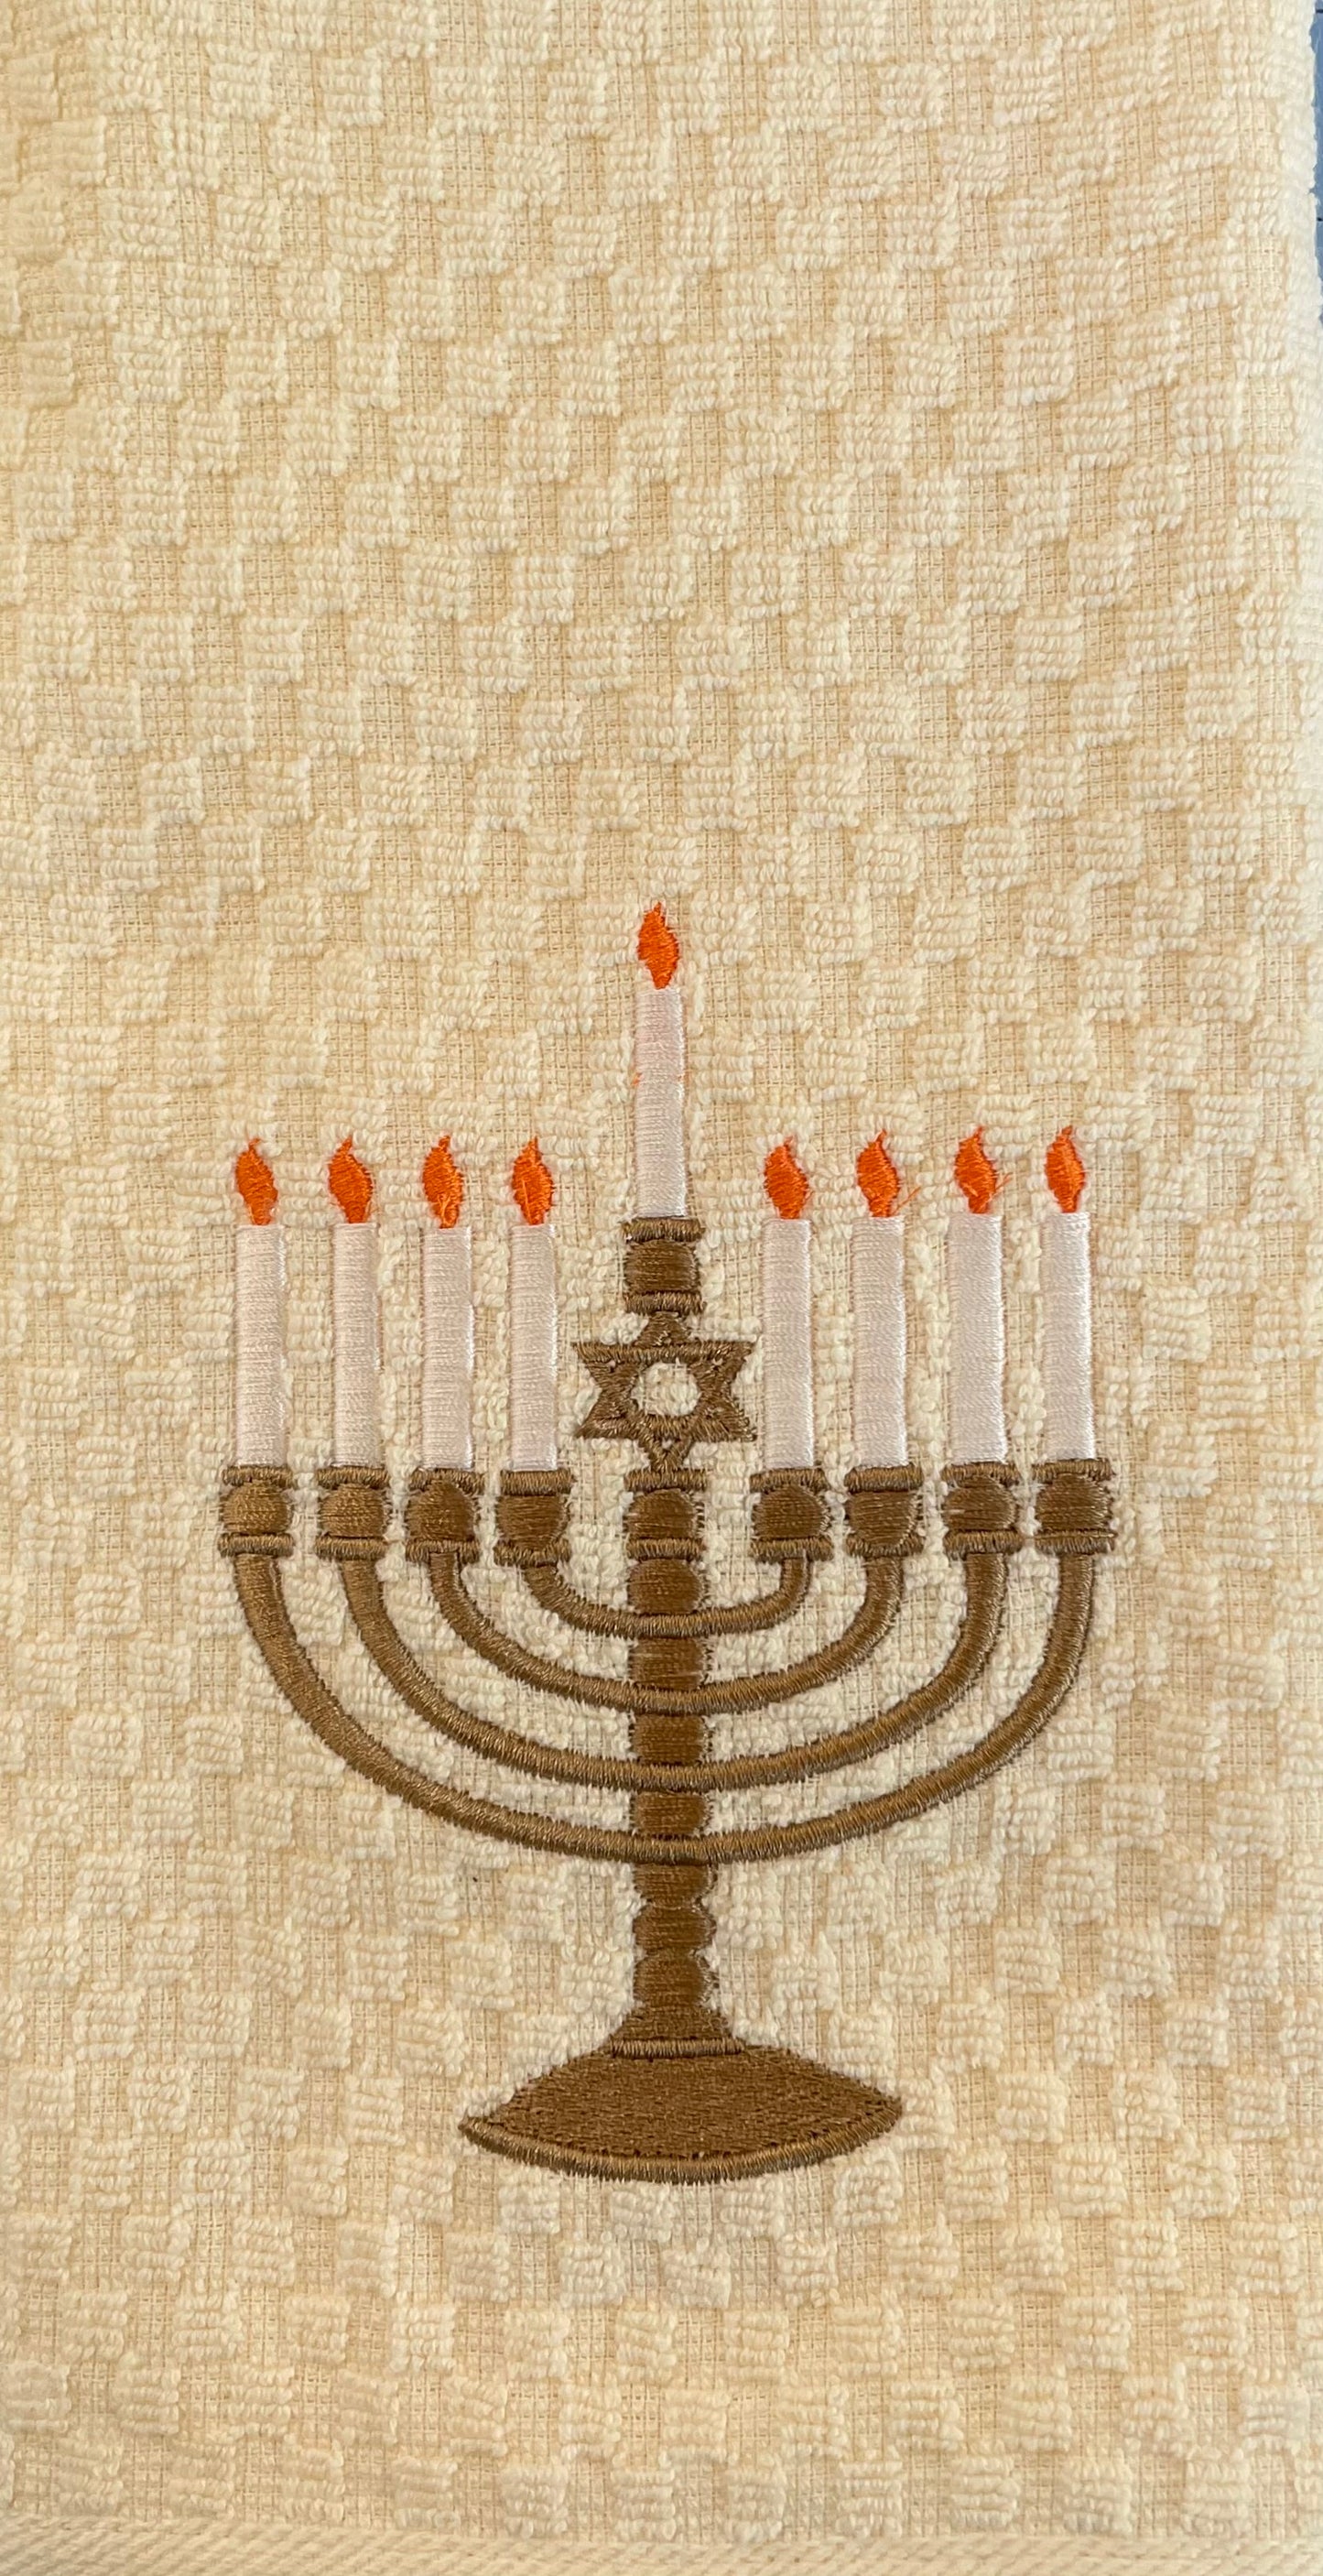 Embroidered Hanukkah Kitchen Towels